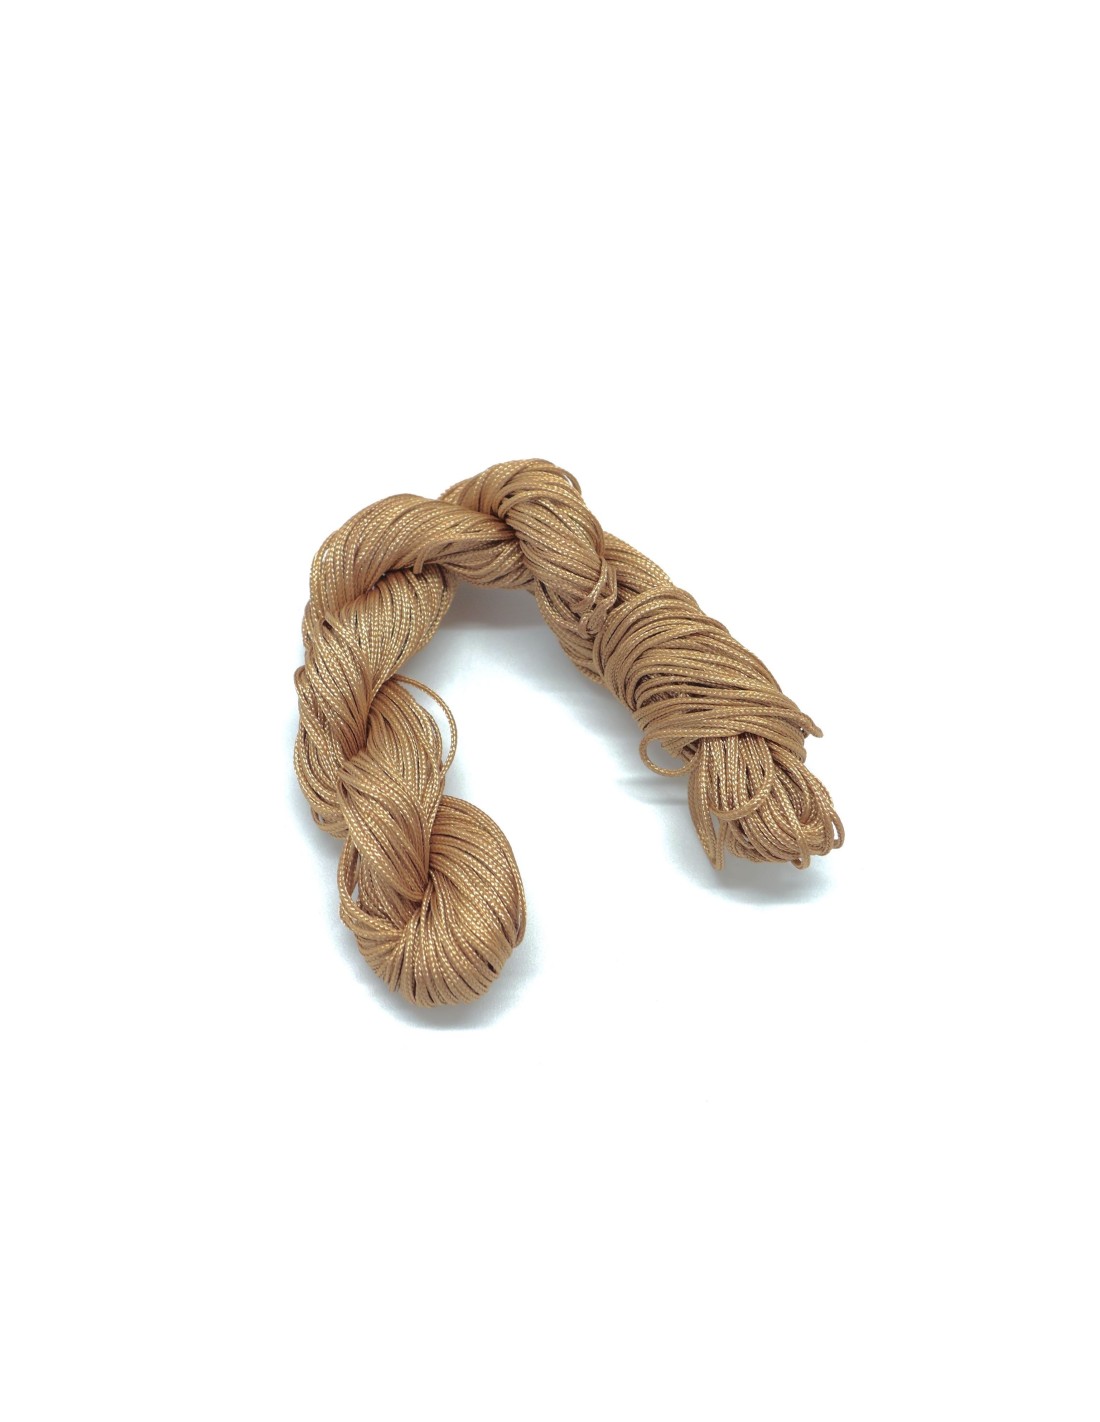 Fil cordon nylon pour bracelet perles shamballa macramé création